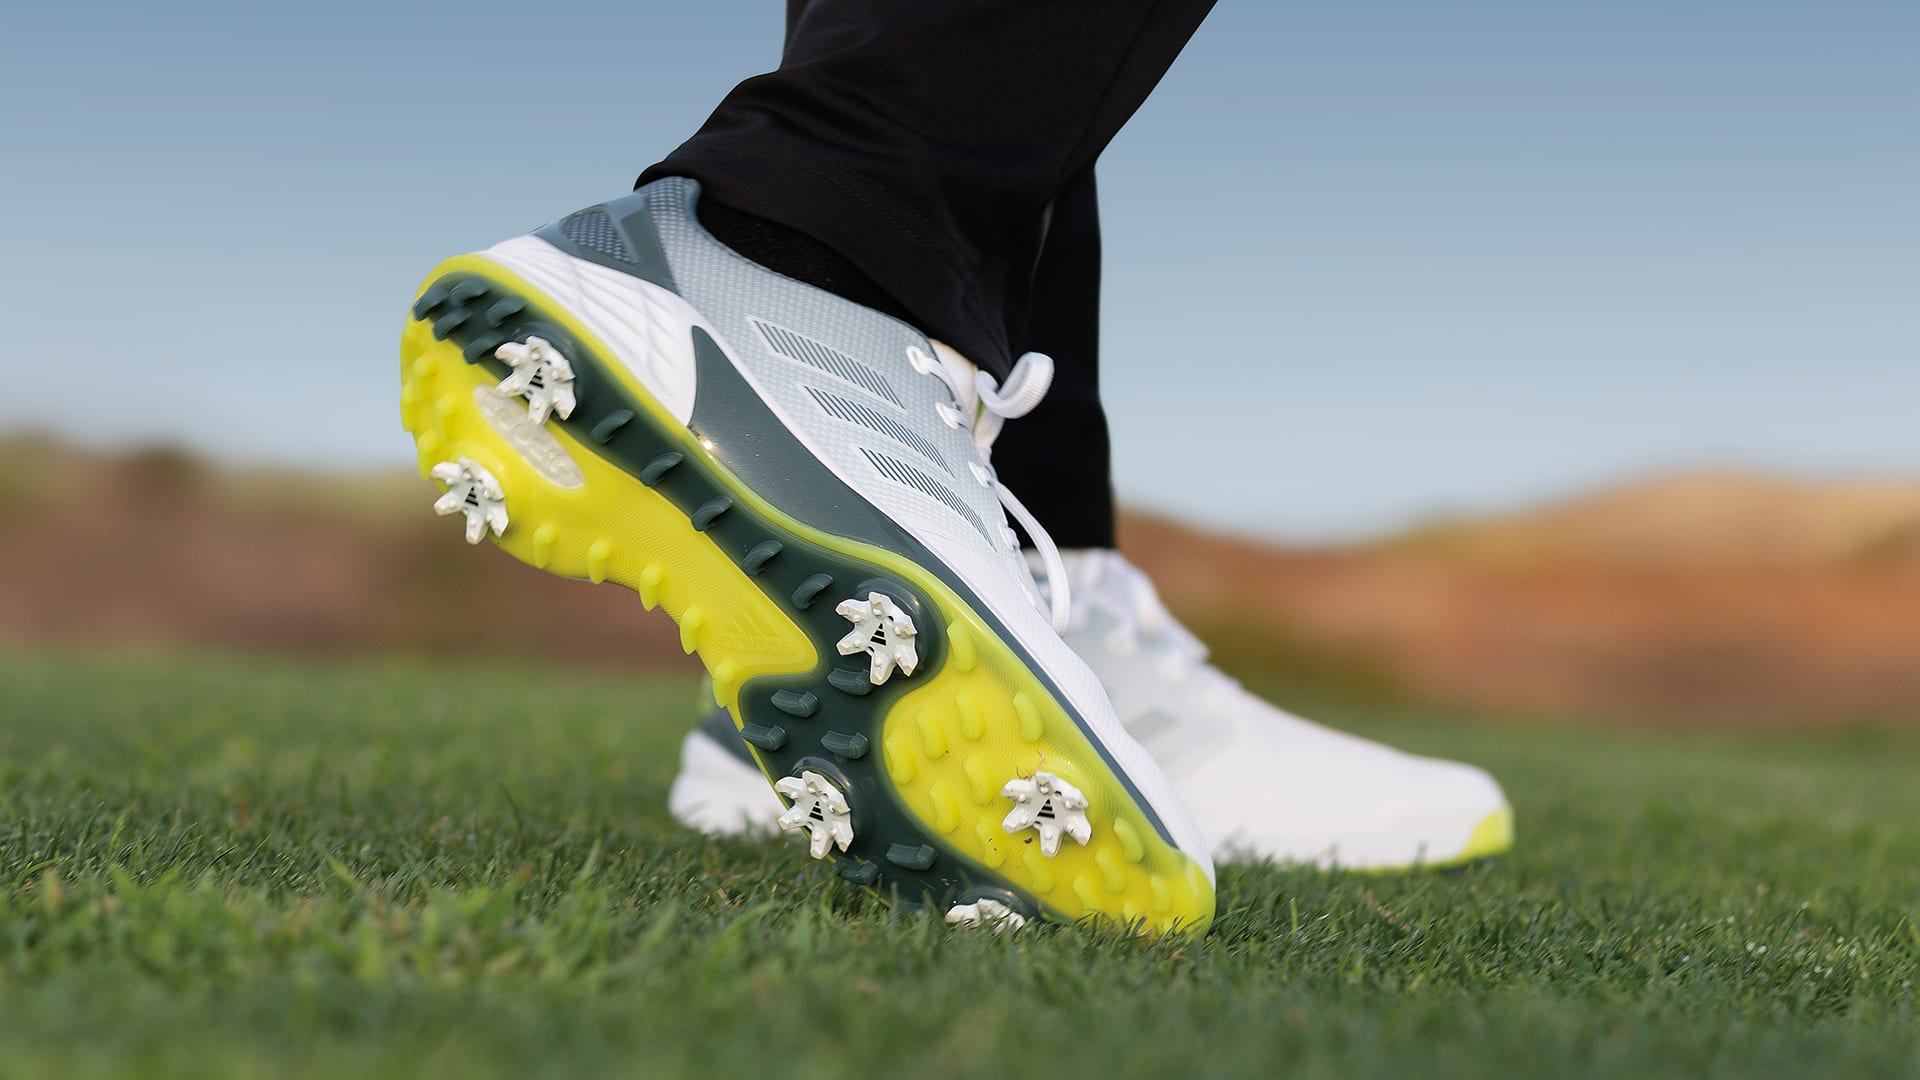 Golfing in adidas